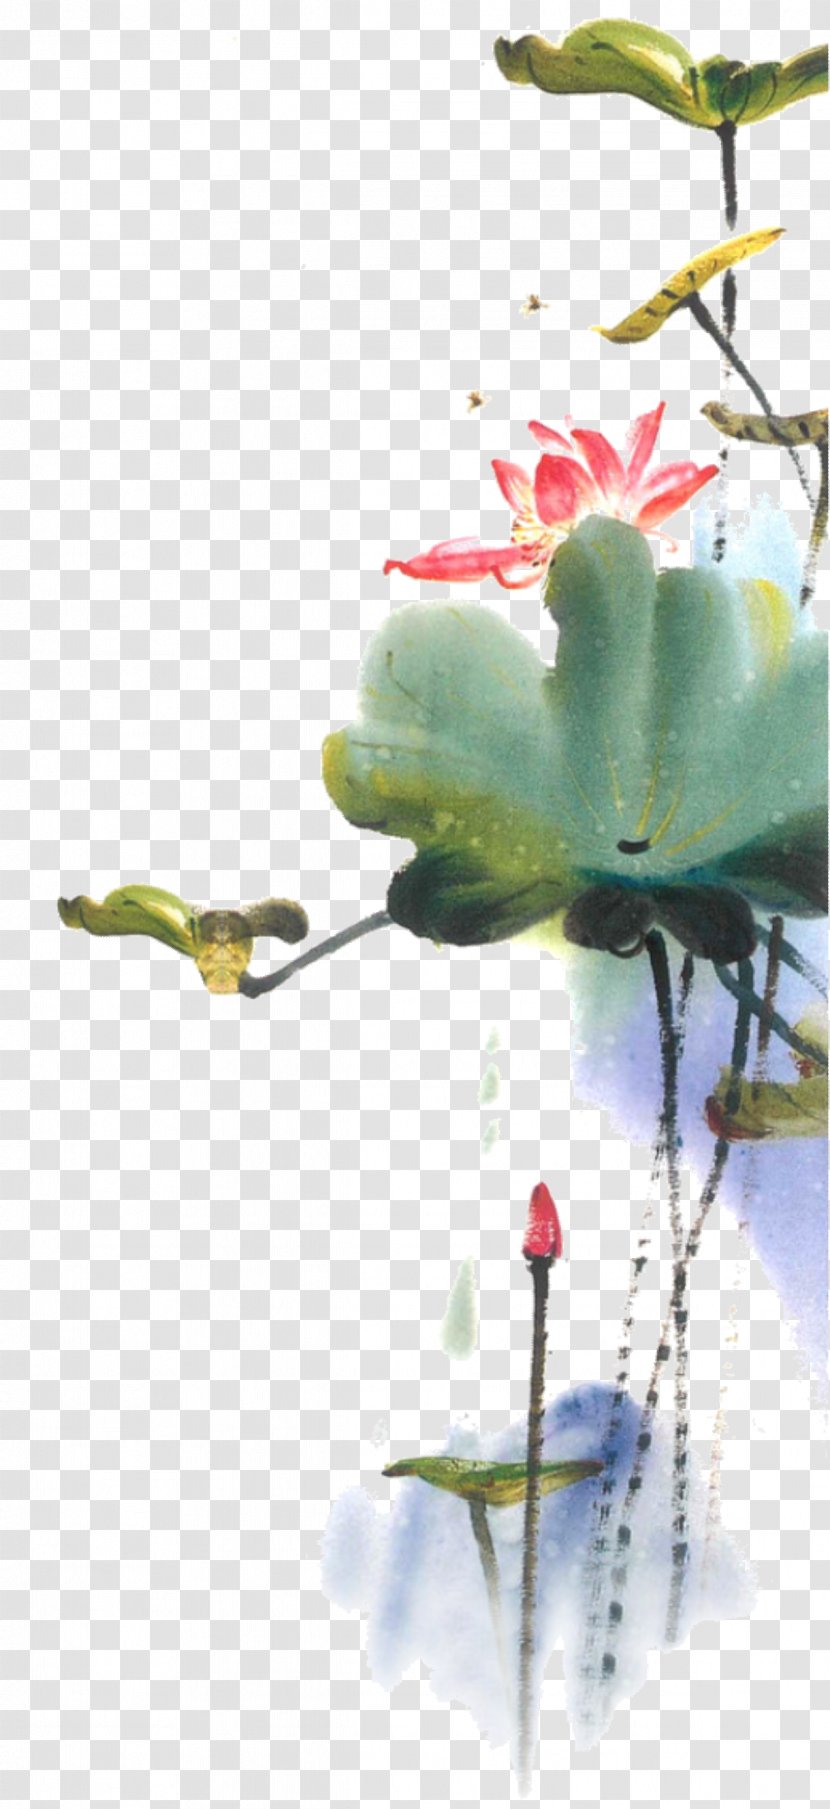 Nelumbo Nucifera Ink Wash Painting Chinese U611bu84eeu8aaa - Plant Stem - Lotus Illustrations Image Transparent PNG